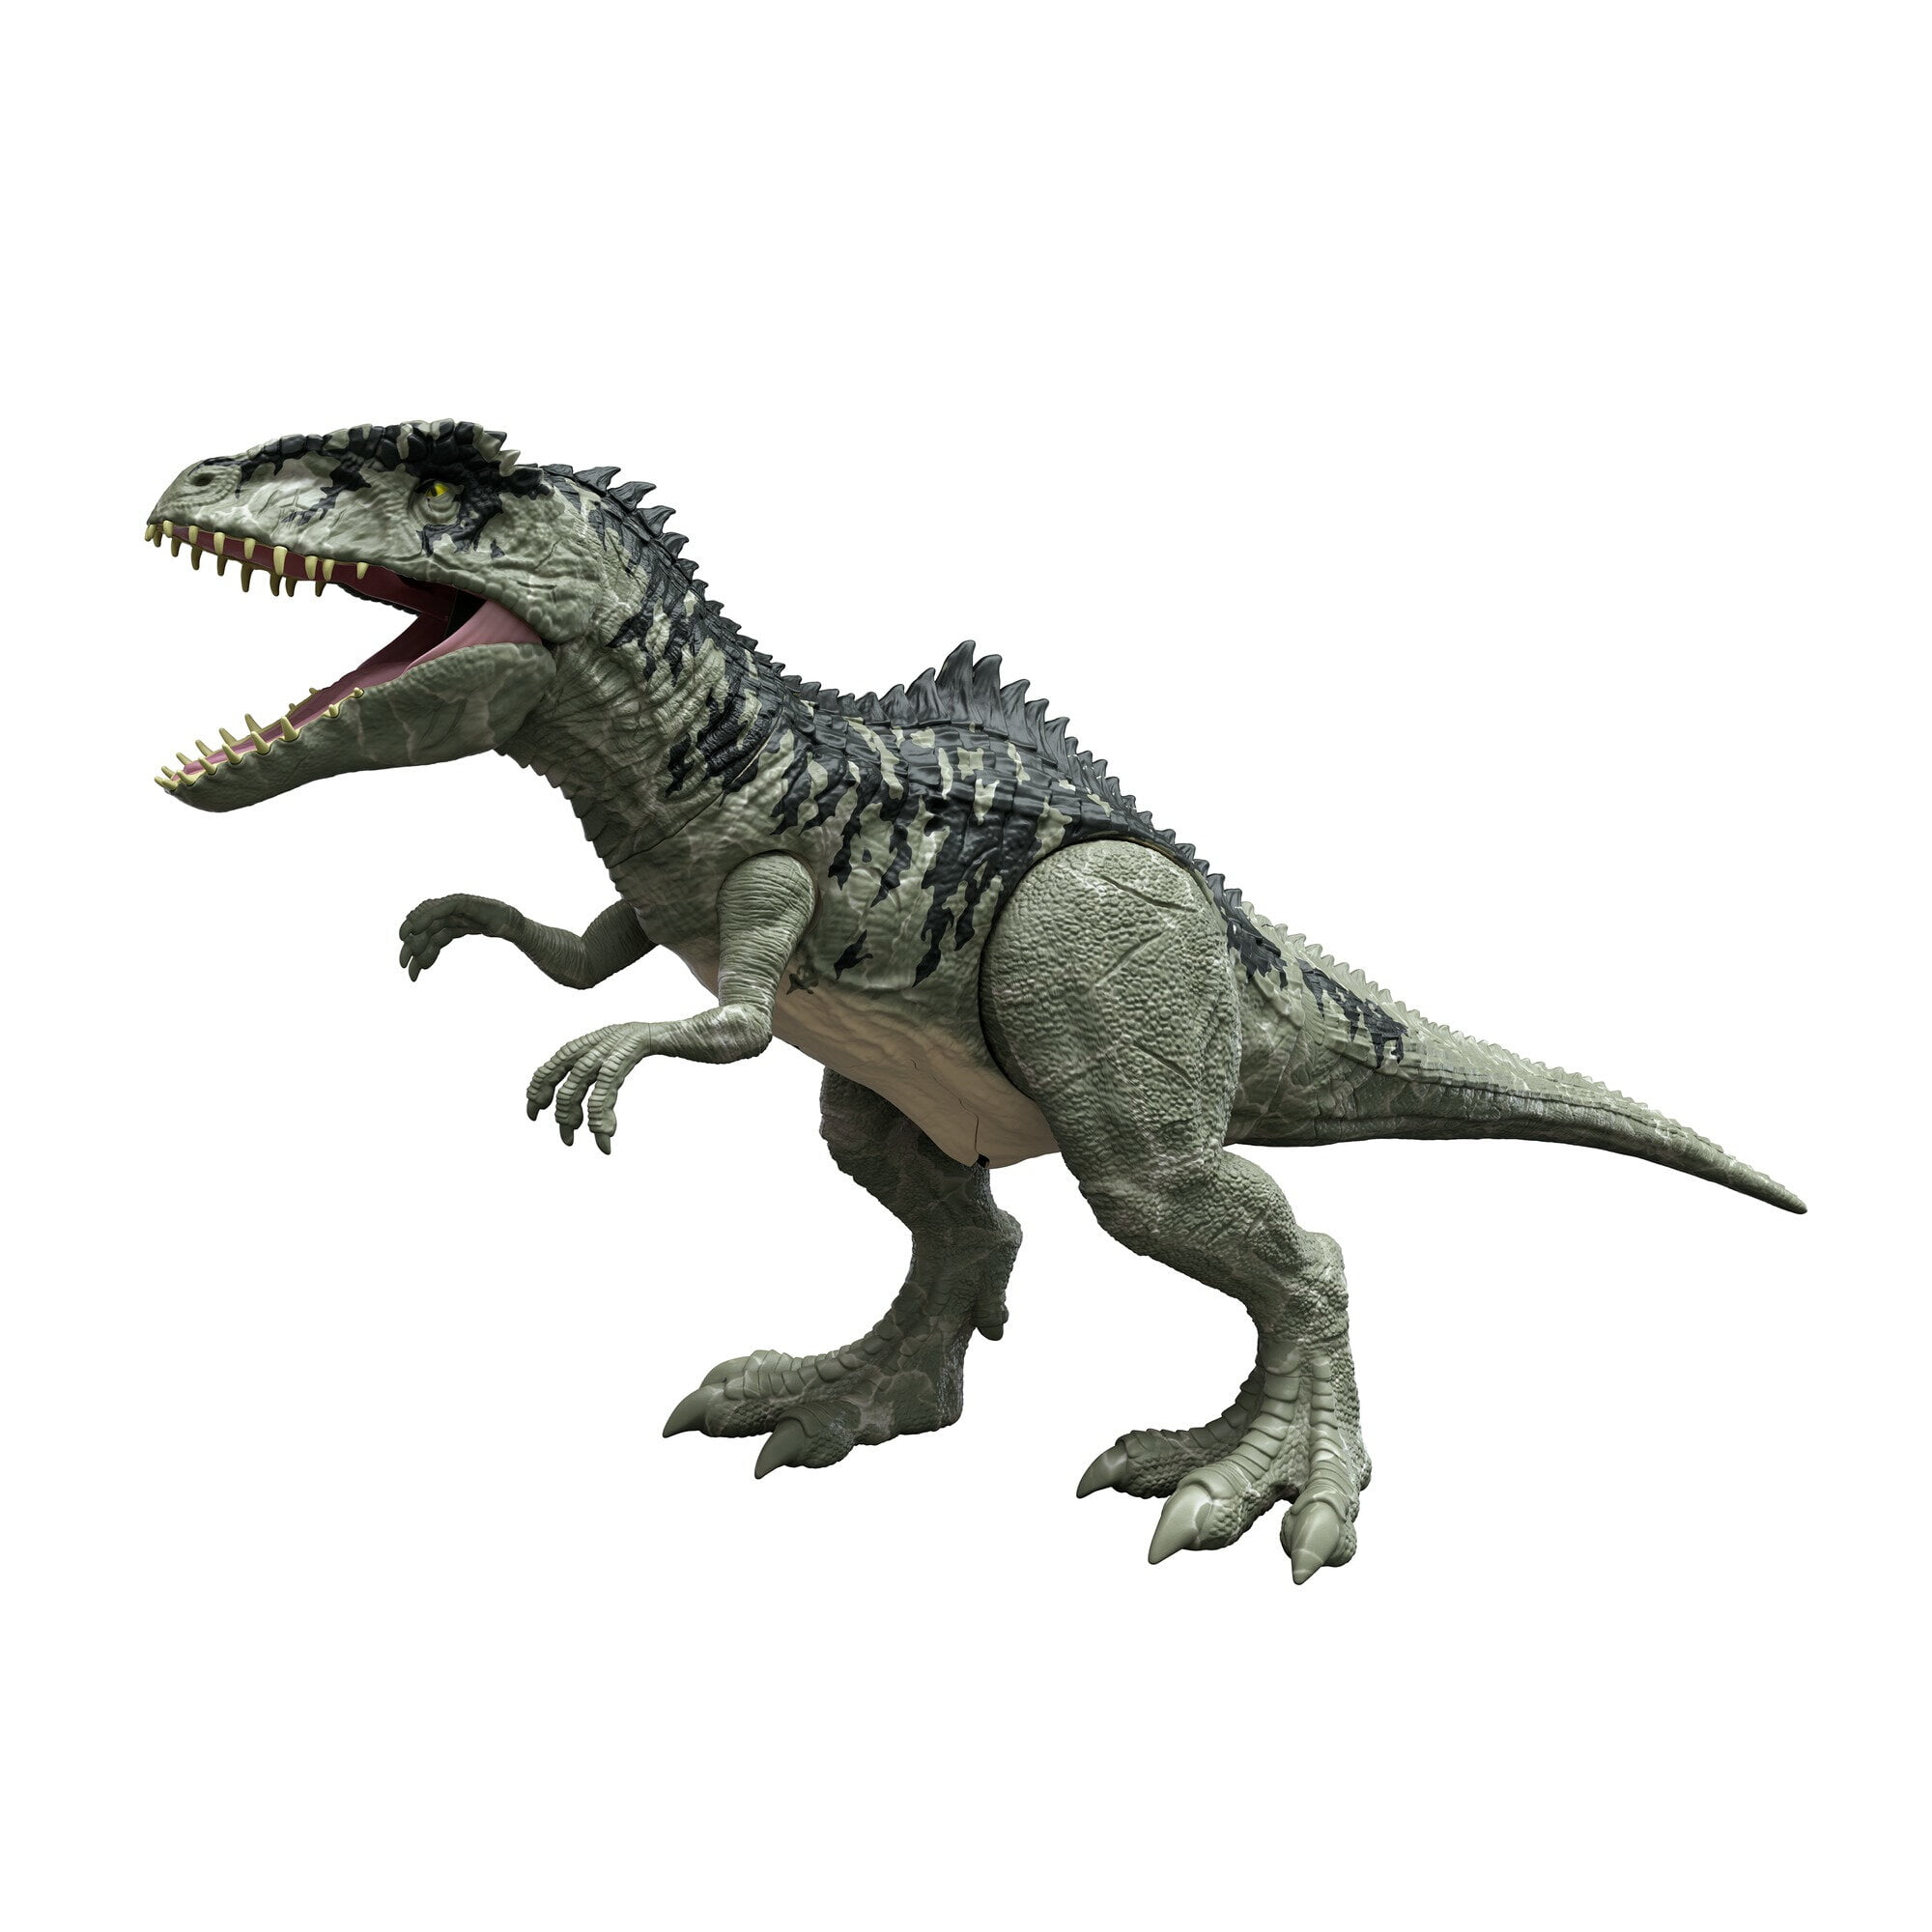 Black Jurassic Realistic Looking Dinosaur Figure Collection Toy Giganotosaurus 